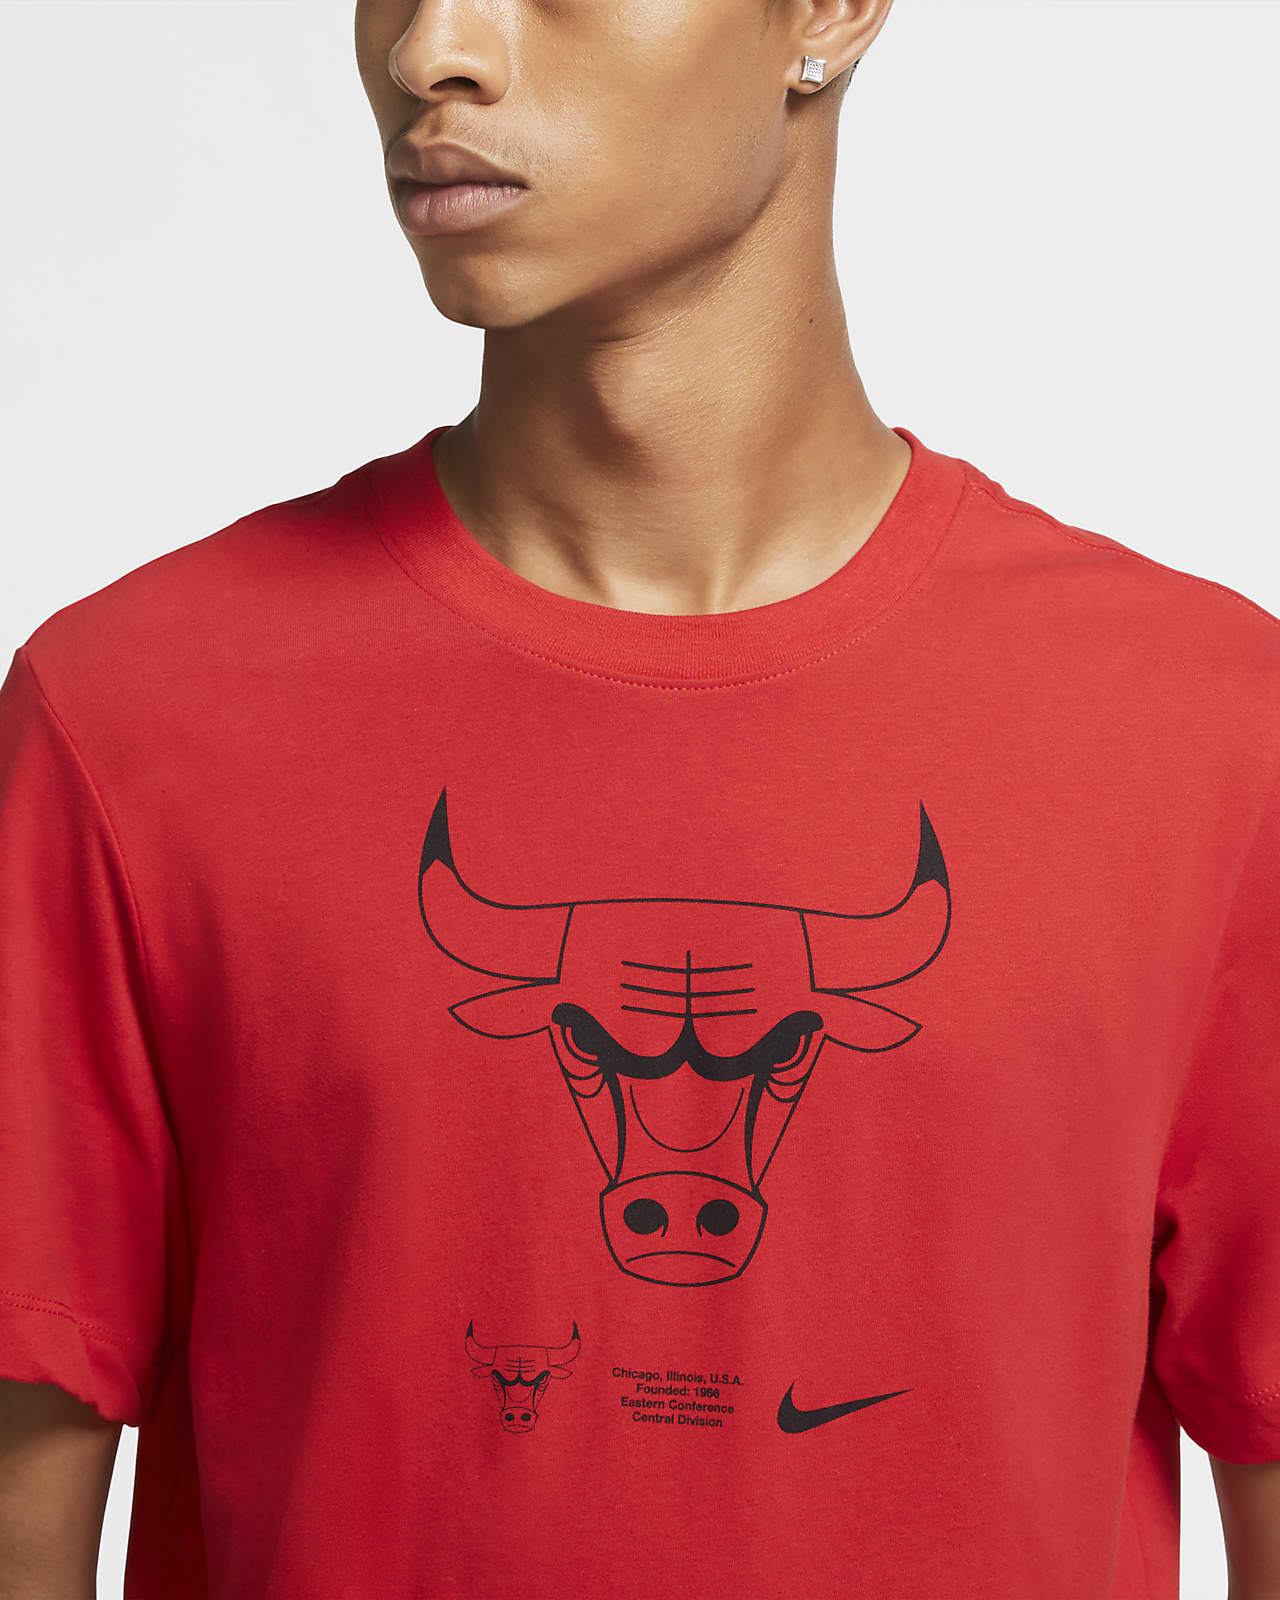 Herren T-Shirt Chicago Bulls 